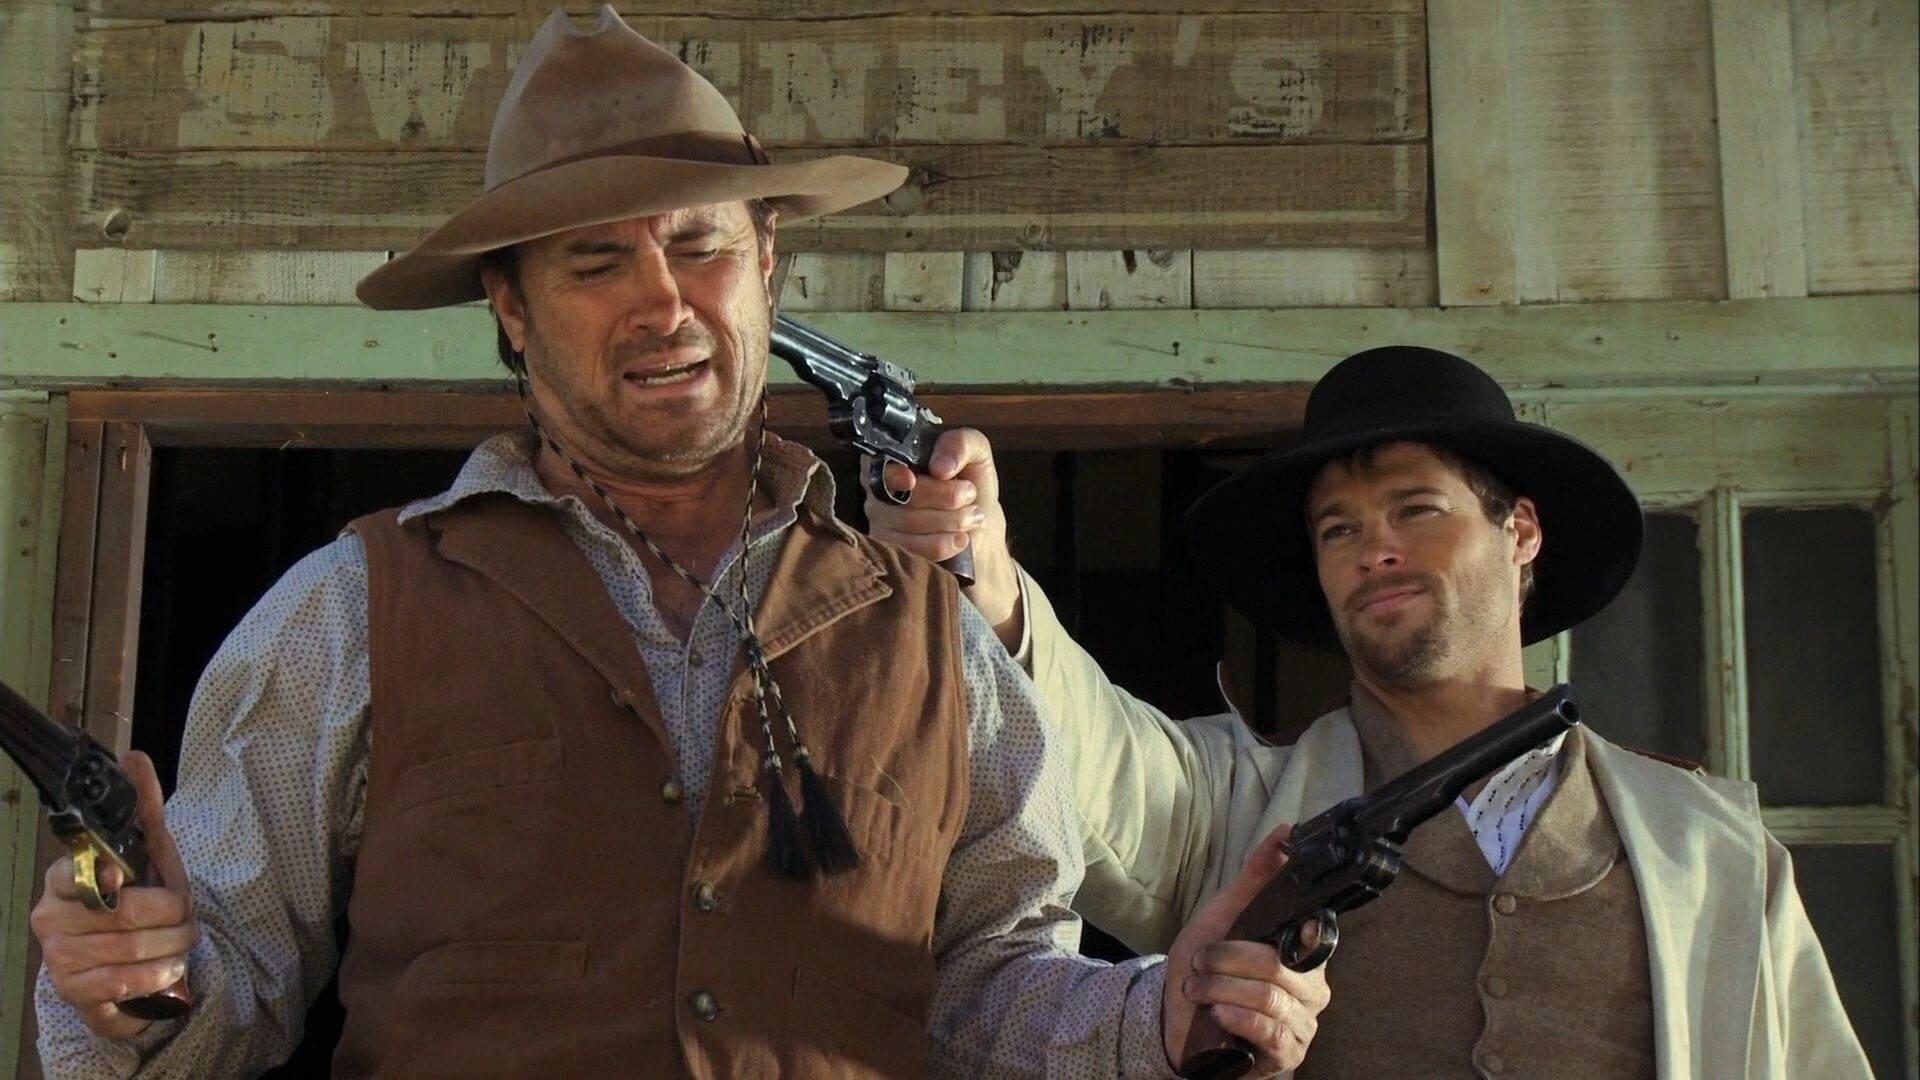 American Bandits: Frank and Jesse James backdrop